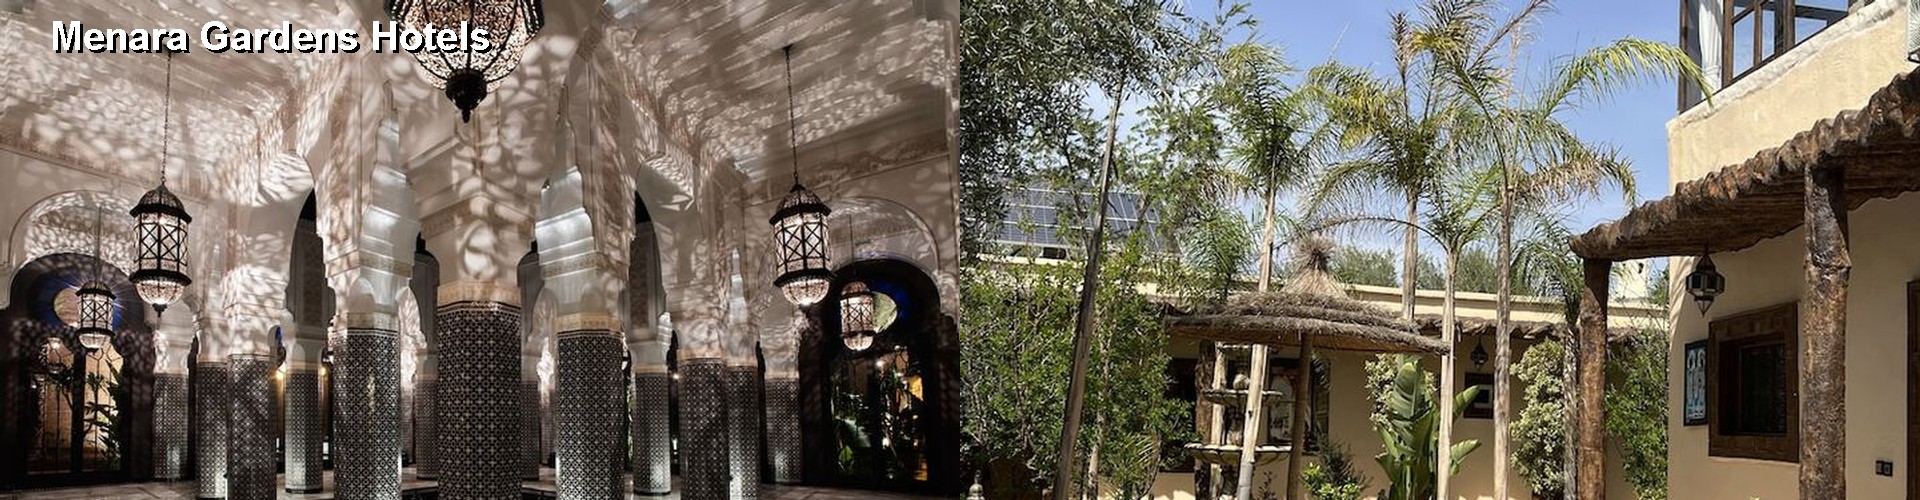 5 Best Hotels near Menara Gardens